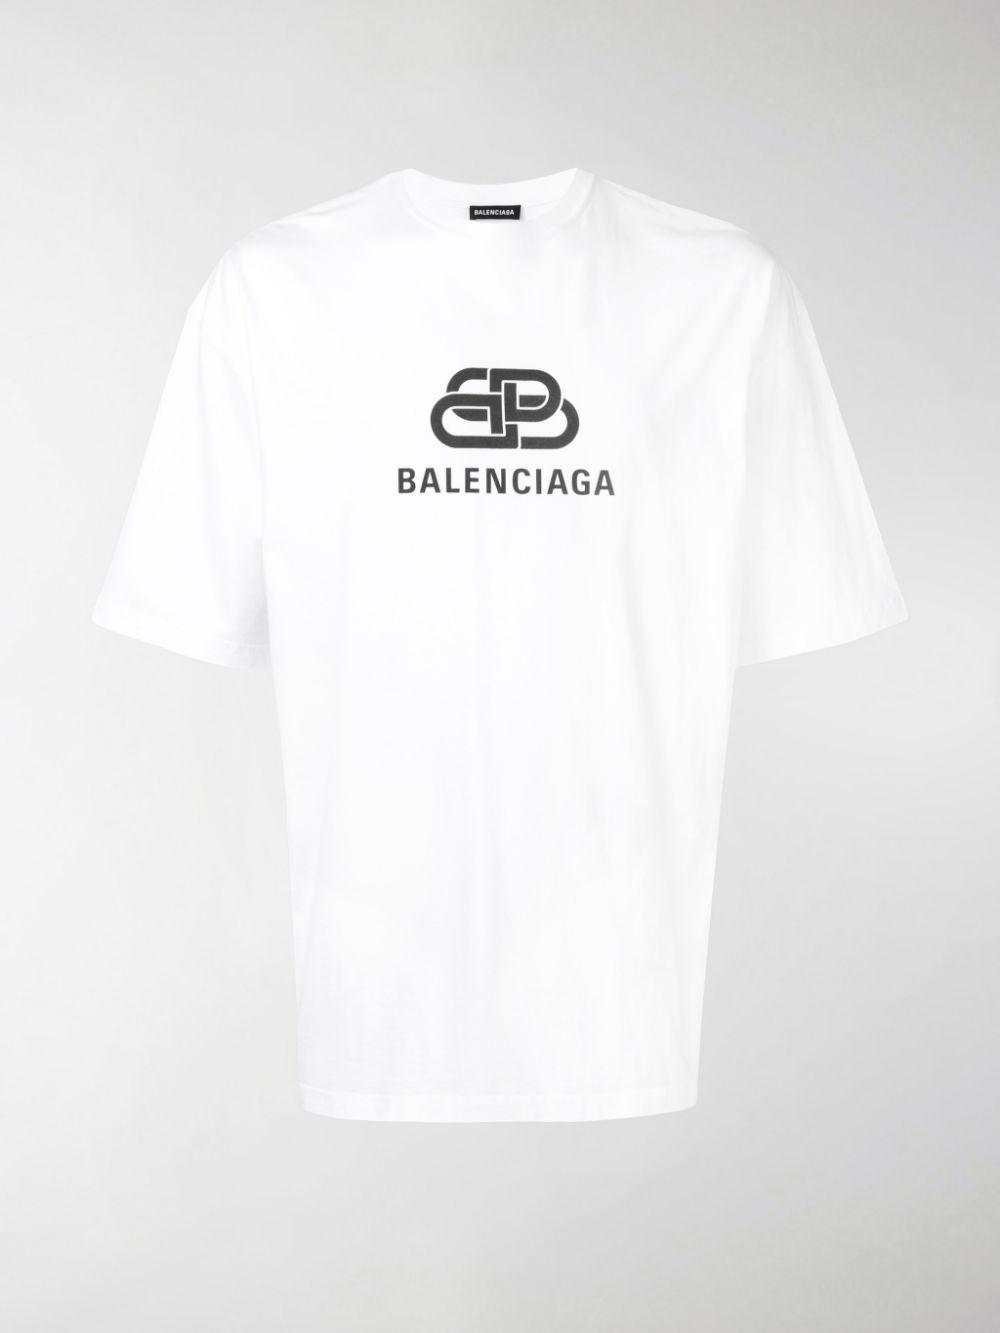 Balenciaga Classic Logo T-shirt in White for Men - Lyst